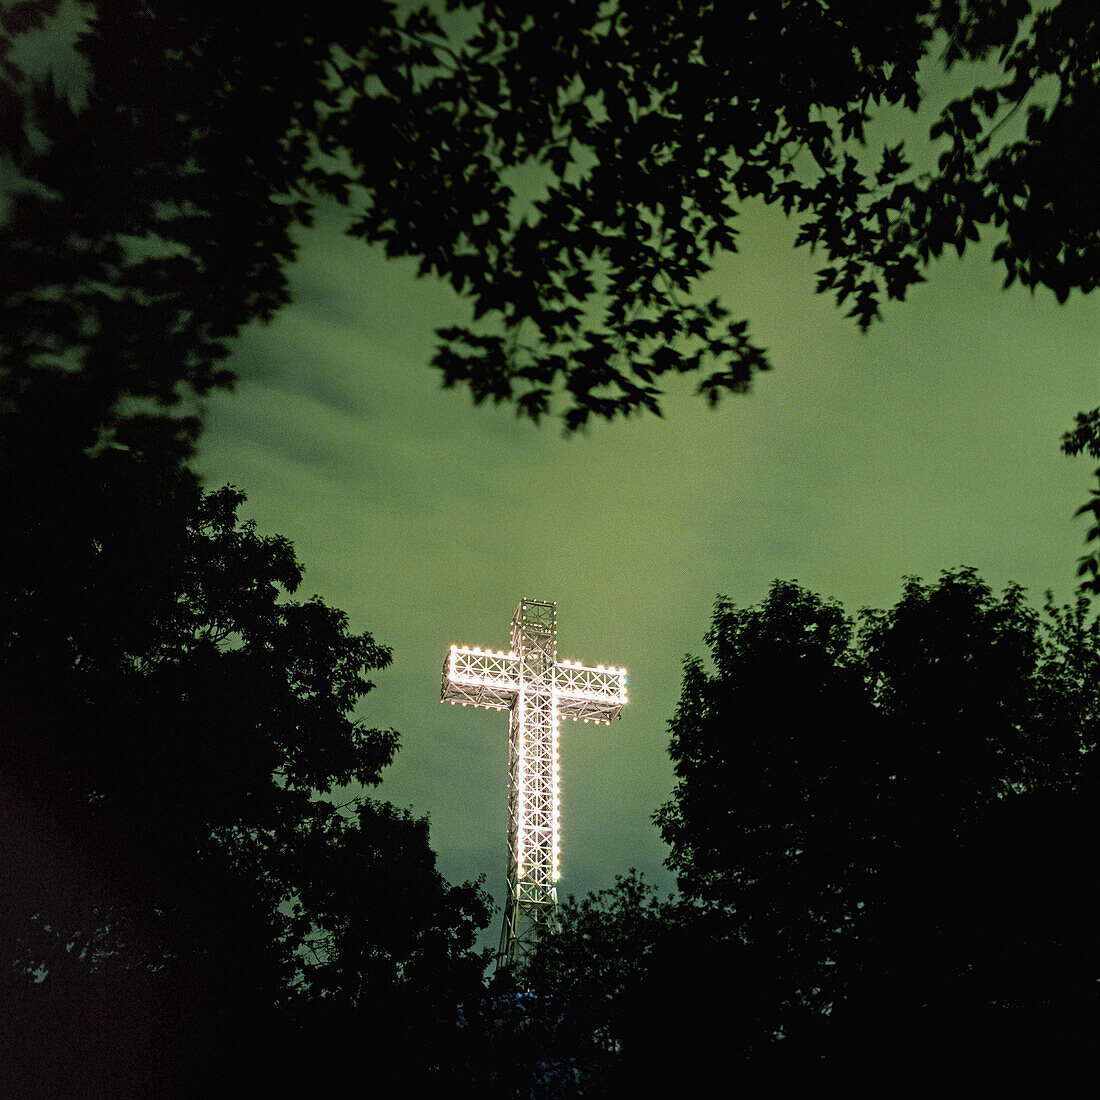 Illuminated Mont Royal Cross at dusk, Montreal, Quebec, Canada